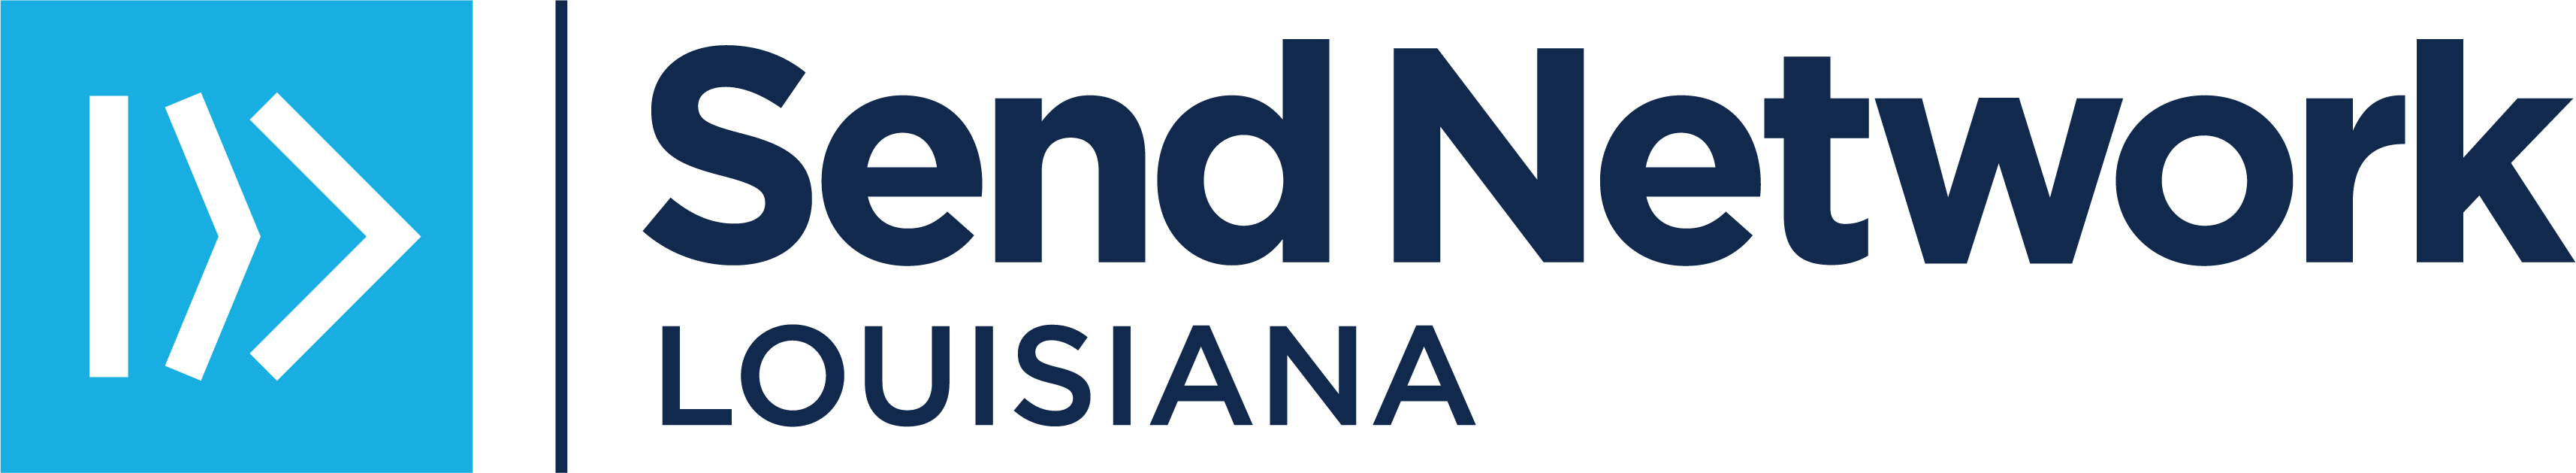 SN Louisiana Logo_BlueNavy